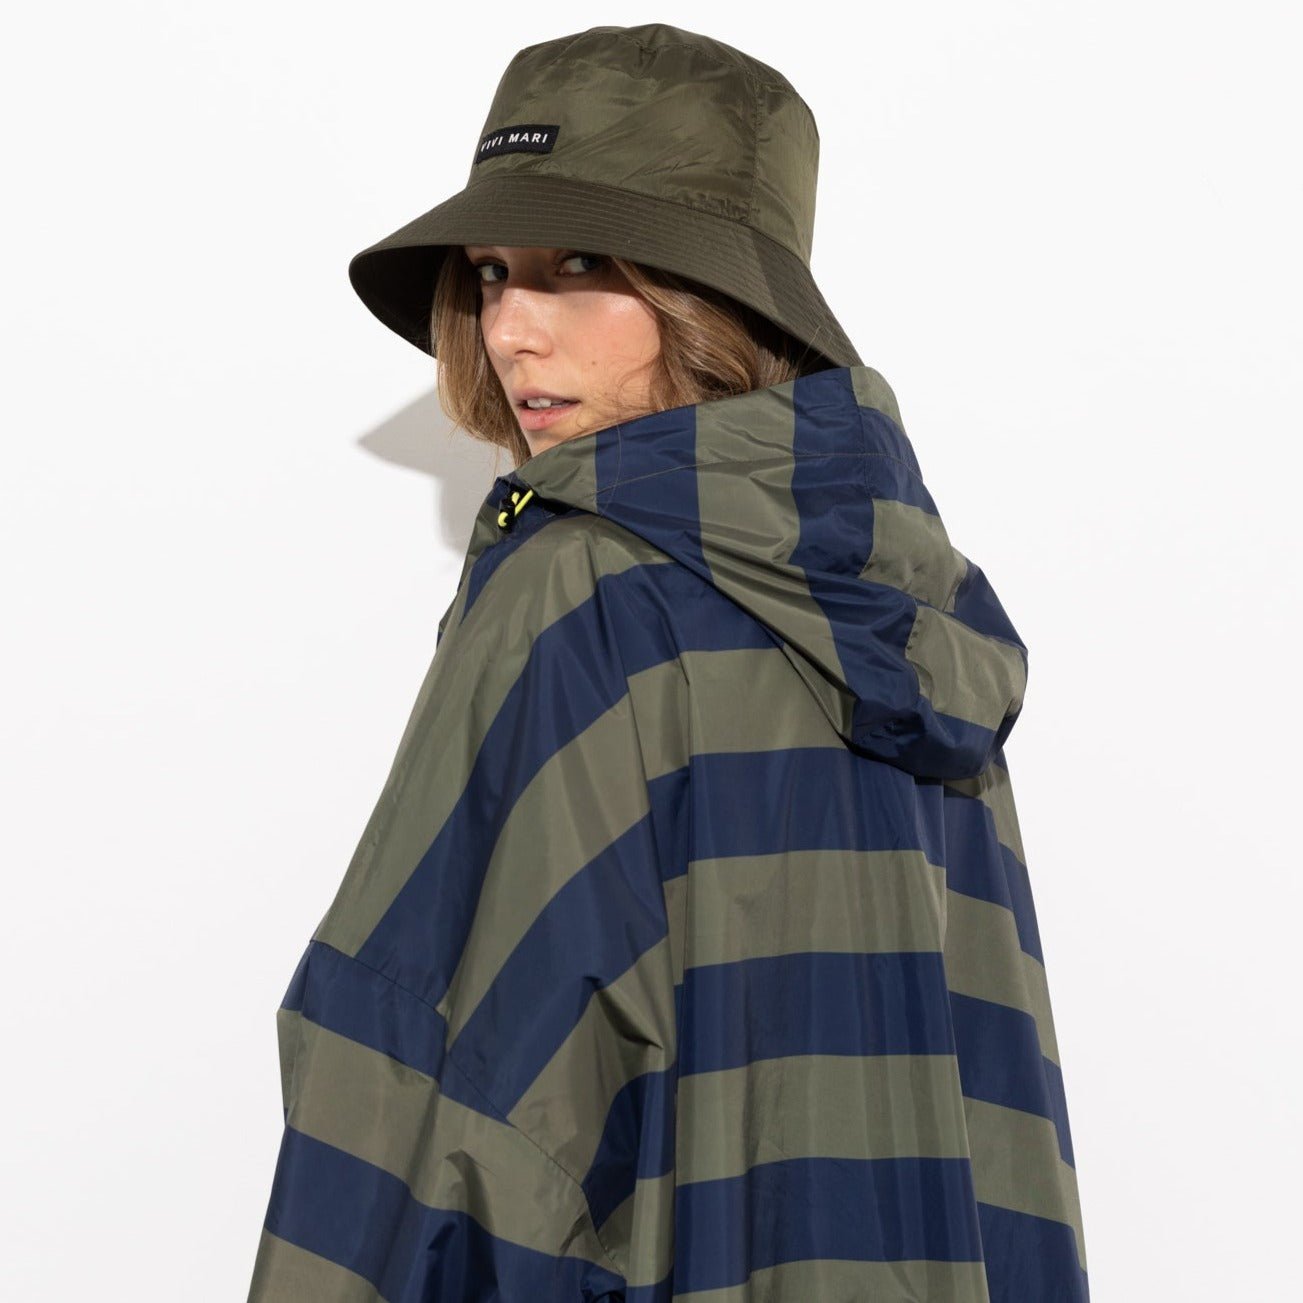 Raincoat bold stripes - navy/olive - VIVI MARI